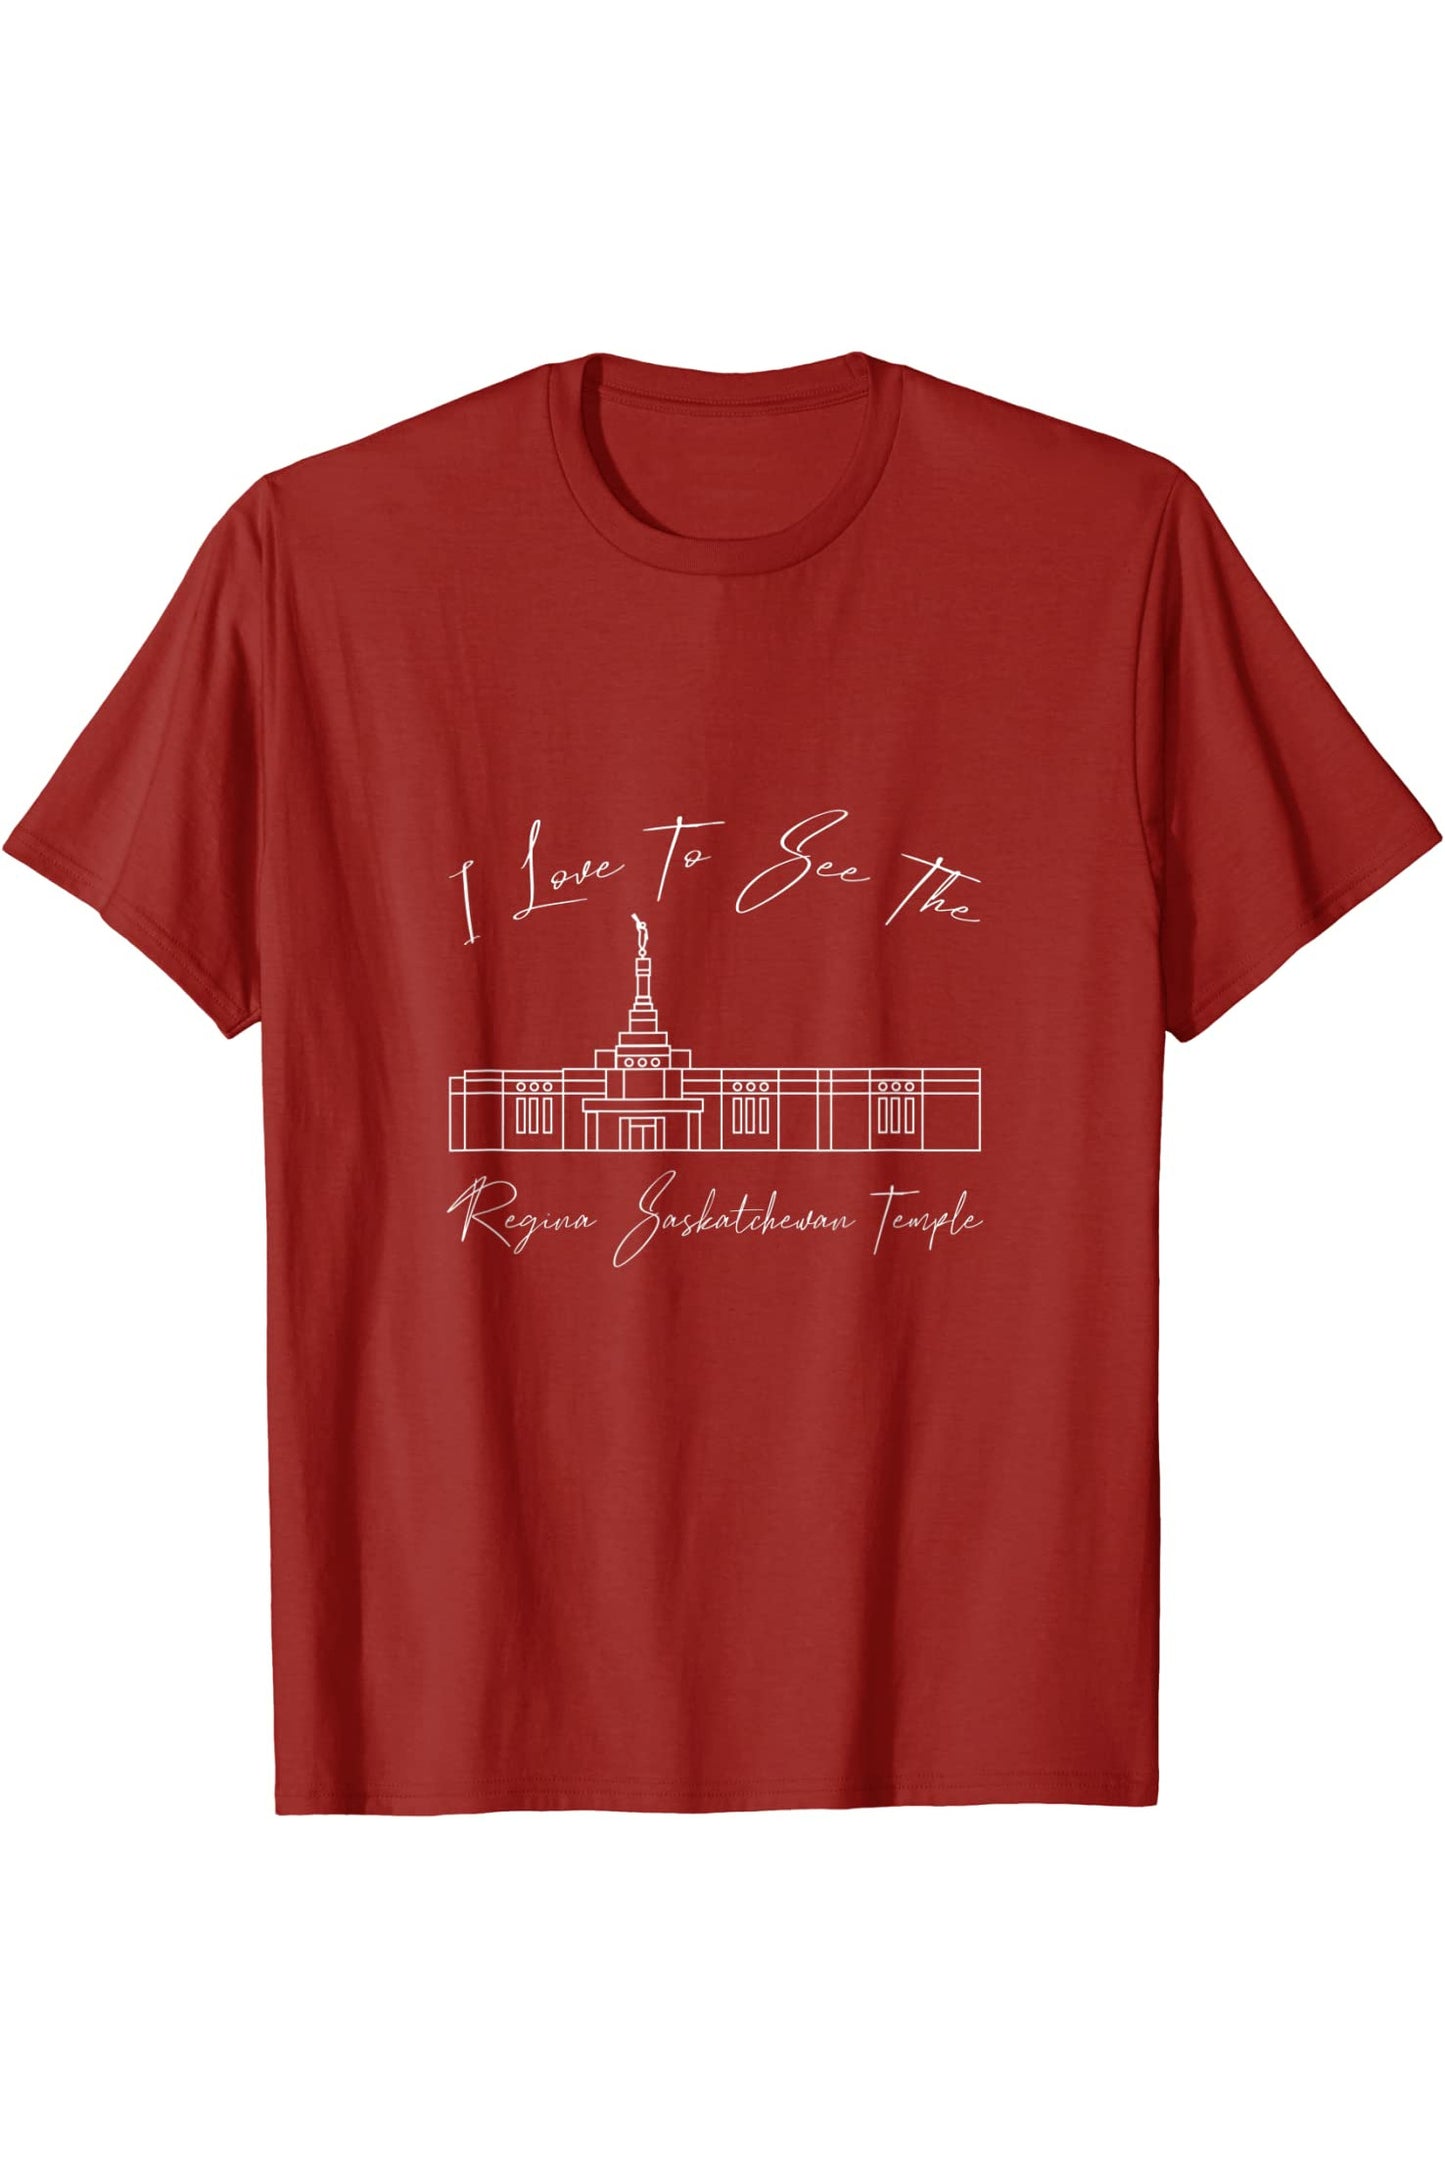 Regina Saskatchewan Temple T-Shirt - Calligraphy Style (English) US